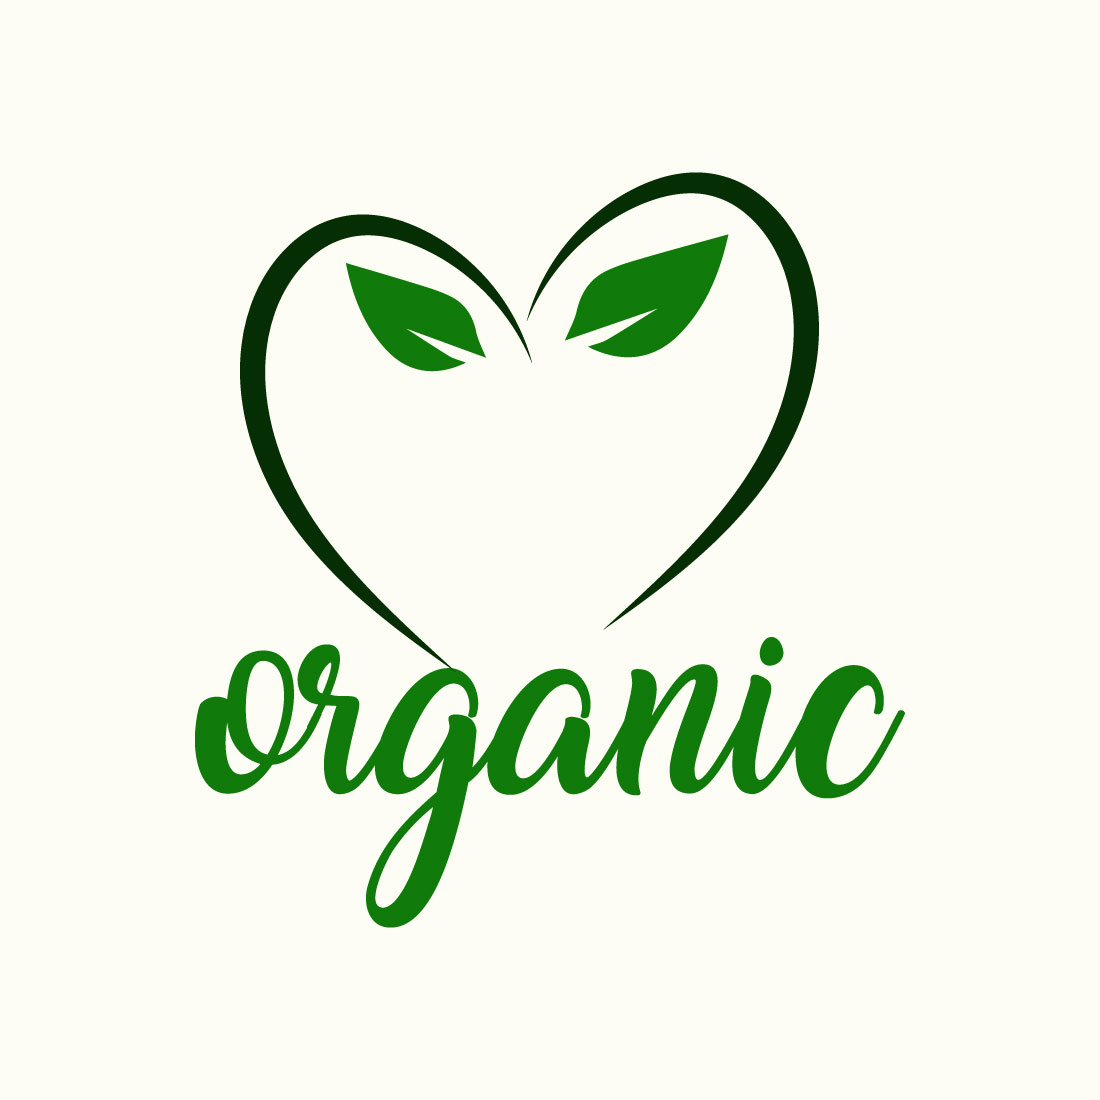 Free Soil health logo cover image.